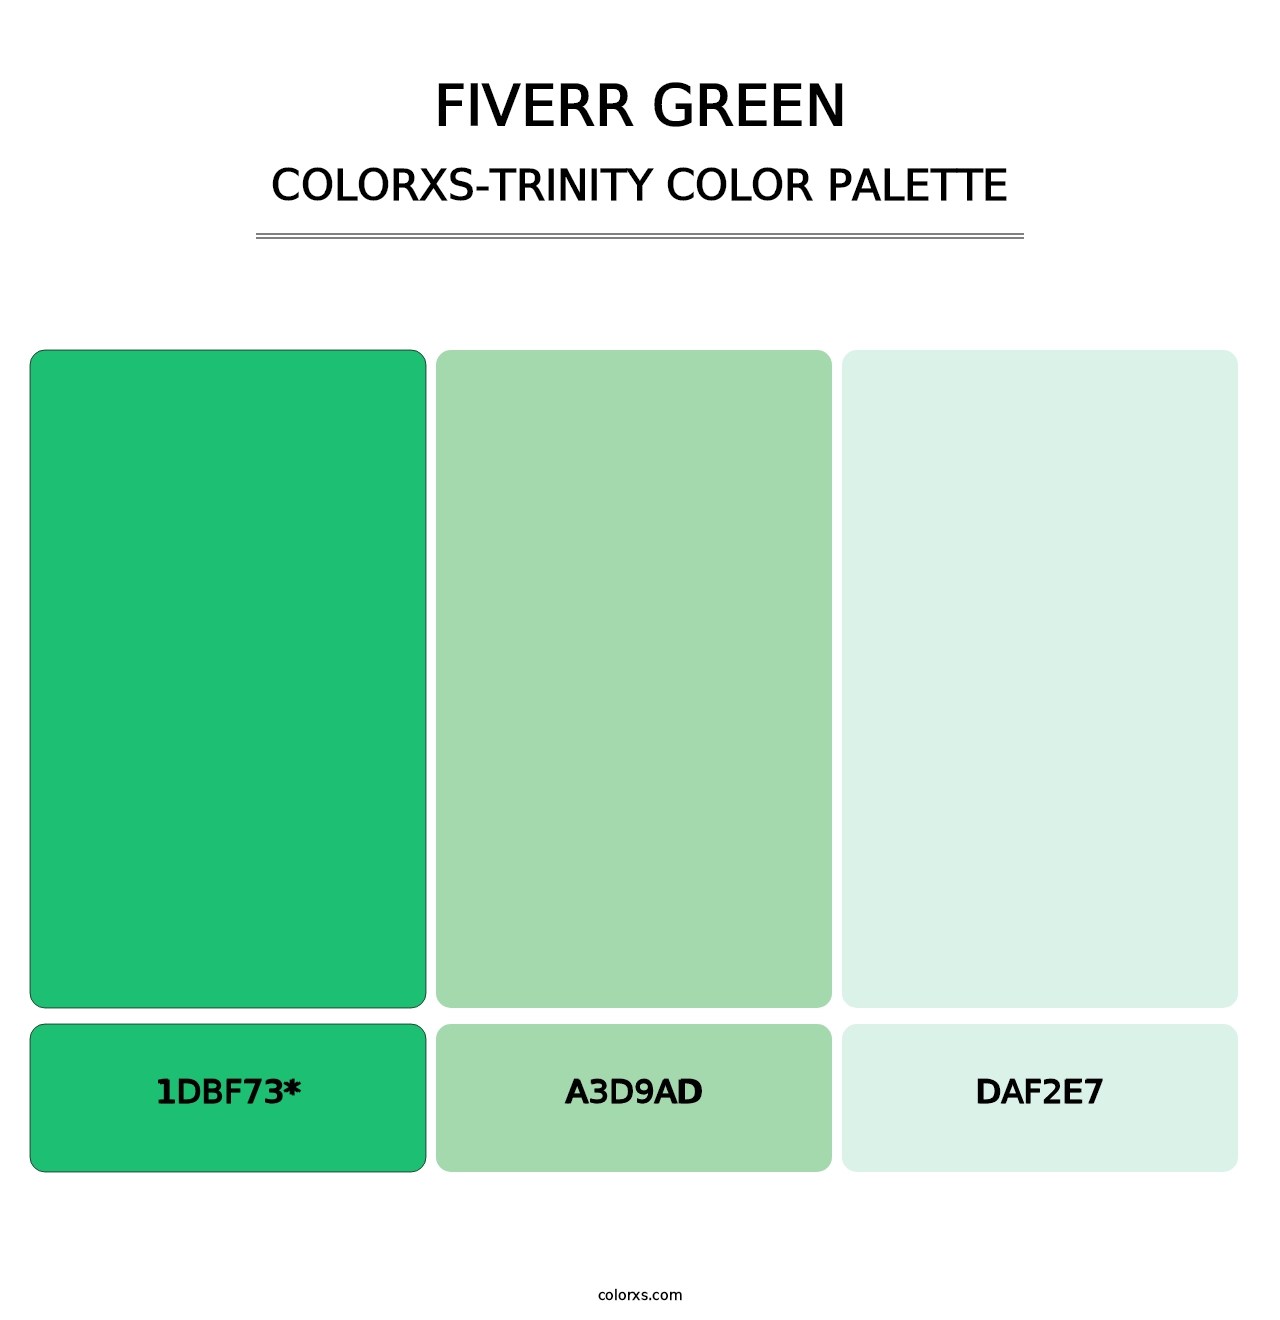 Fiverr Green - Colorxs Trinity Palette